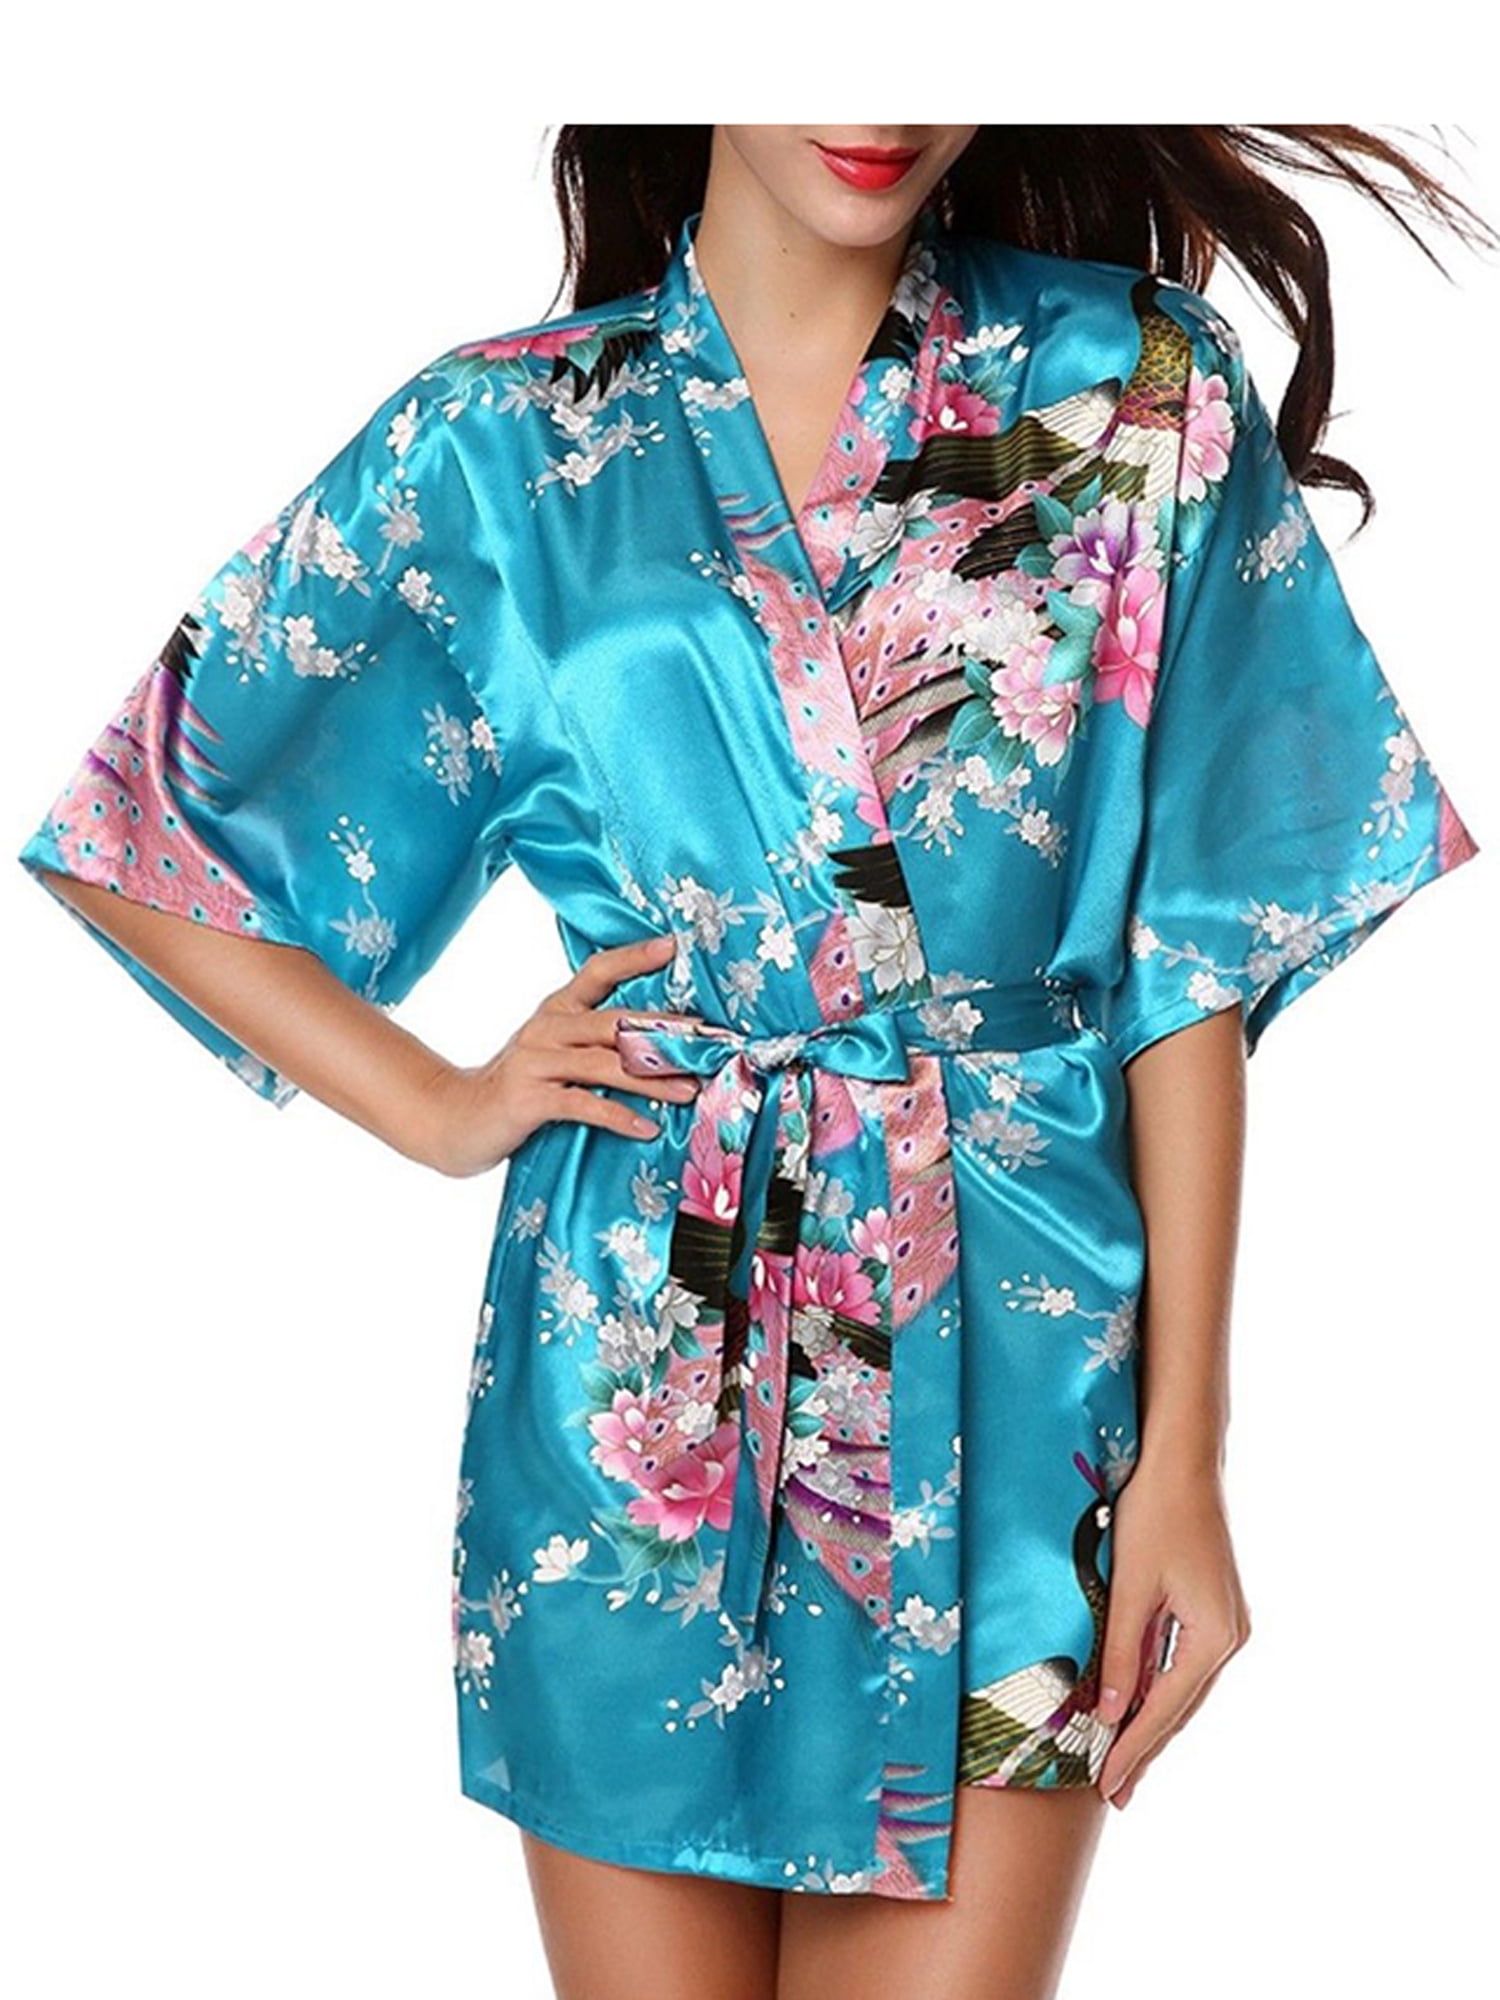 Breezy Blue & Grey Patterned Silk Kimono Dress Getting Ready Robe Bridal Robe Wedding Robe Nightwear Dressing Gown Bridesmaid Gift